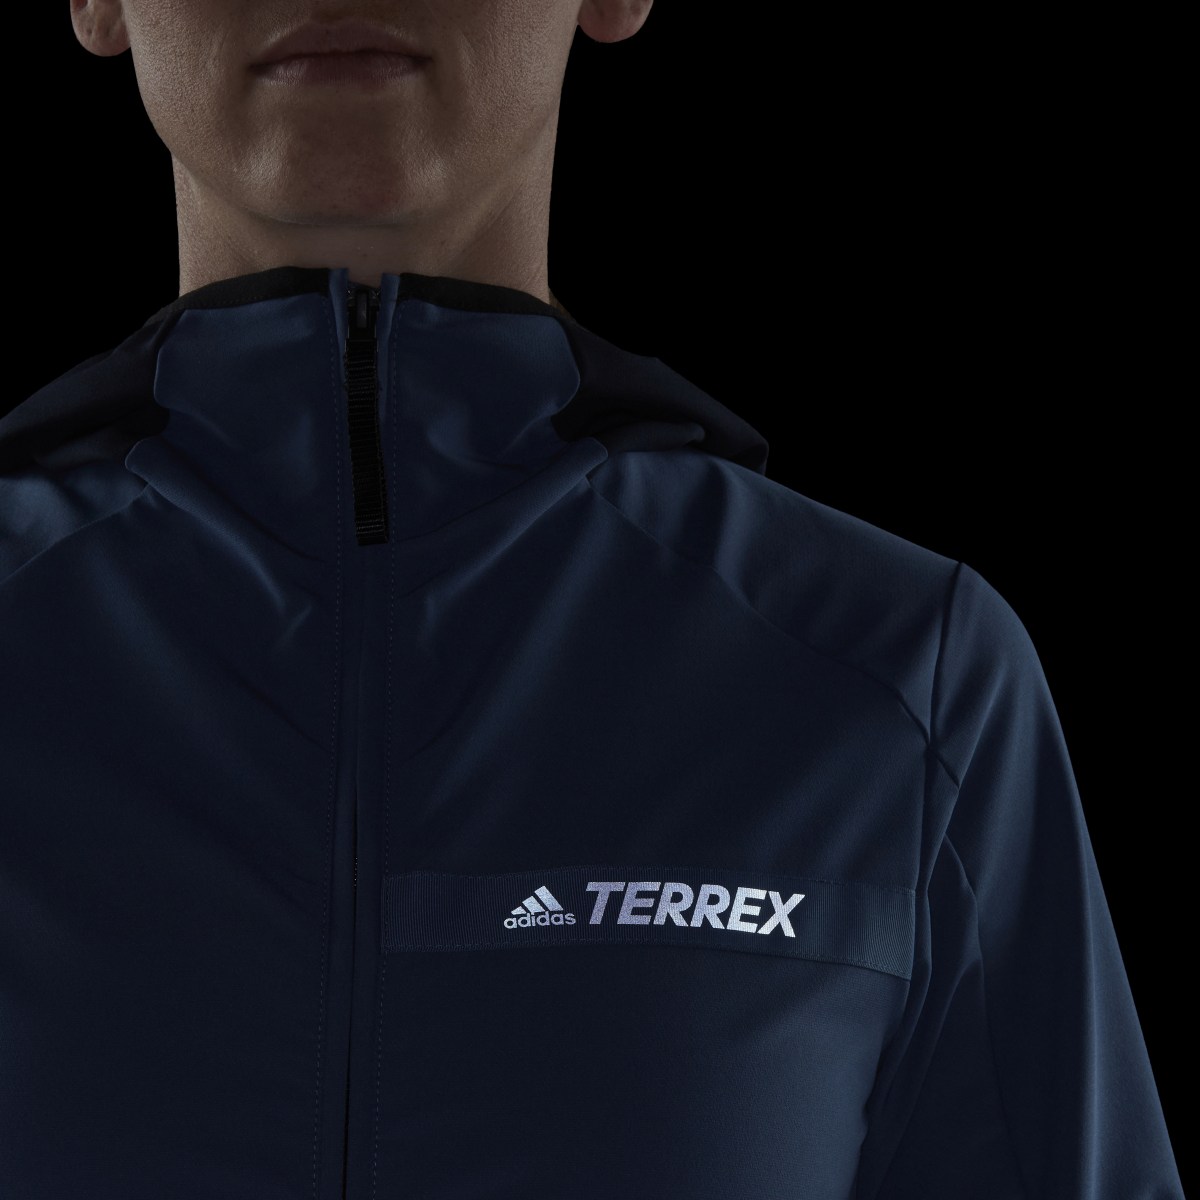 Adidas Terrex Multi Soft Shell Jacket. 7